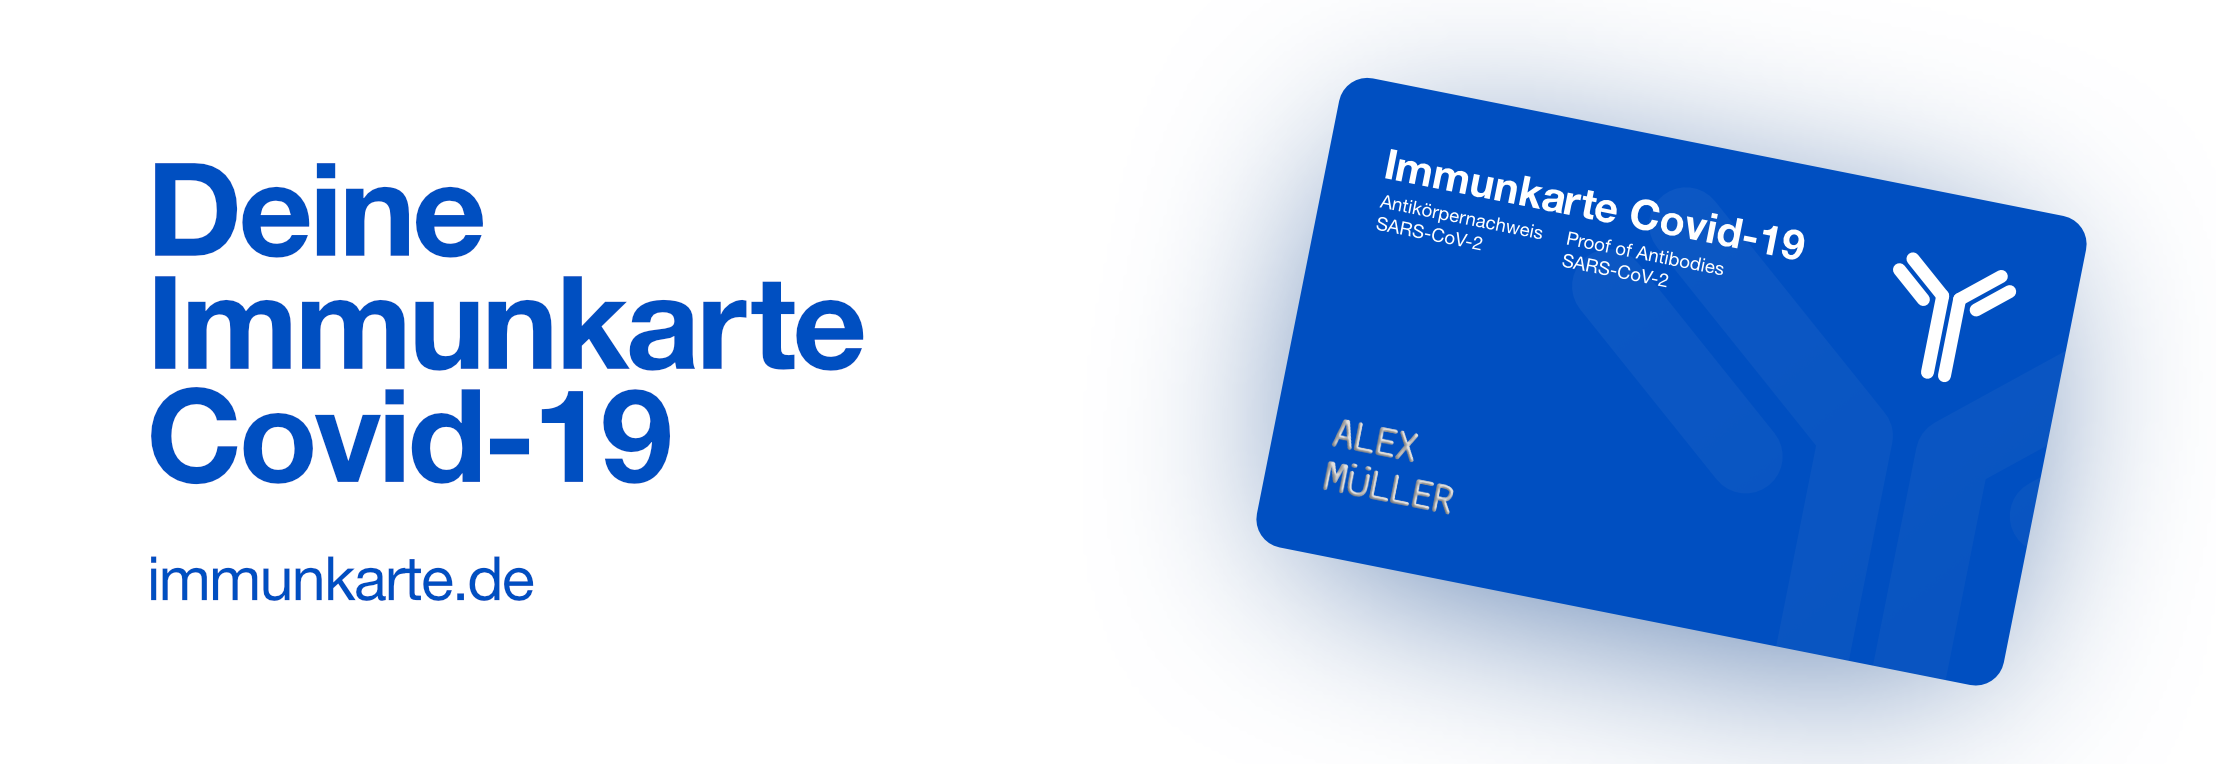 Immunkarte Covid-19 / startup from Frankfurt a. Main / Background